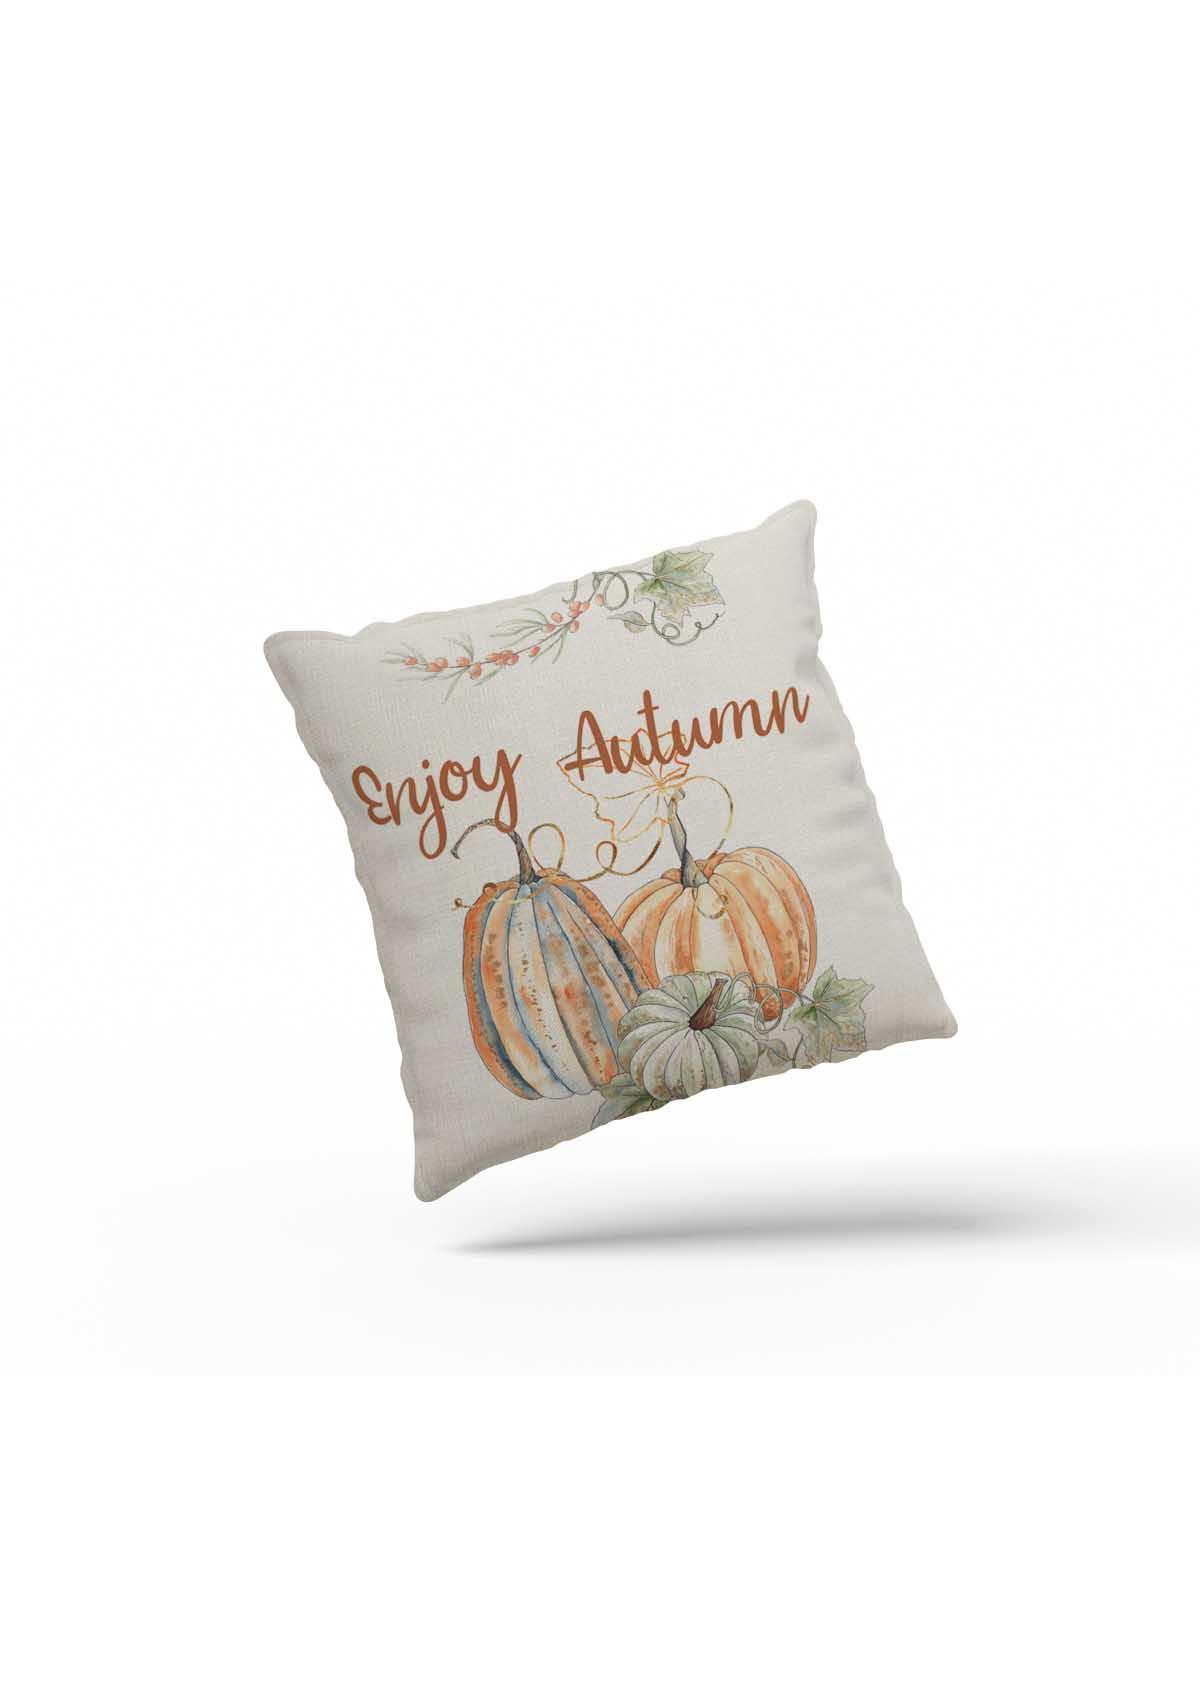 autumn cushion covers uk